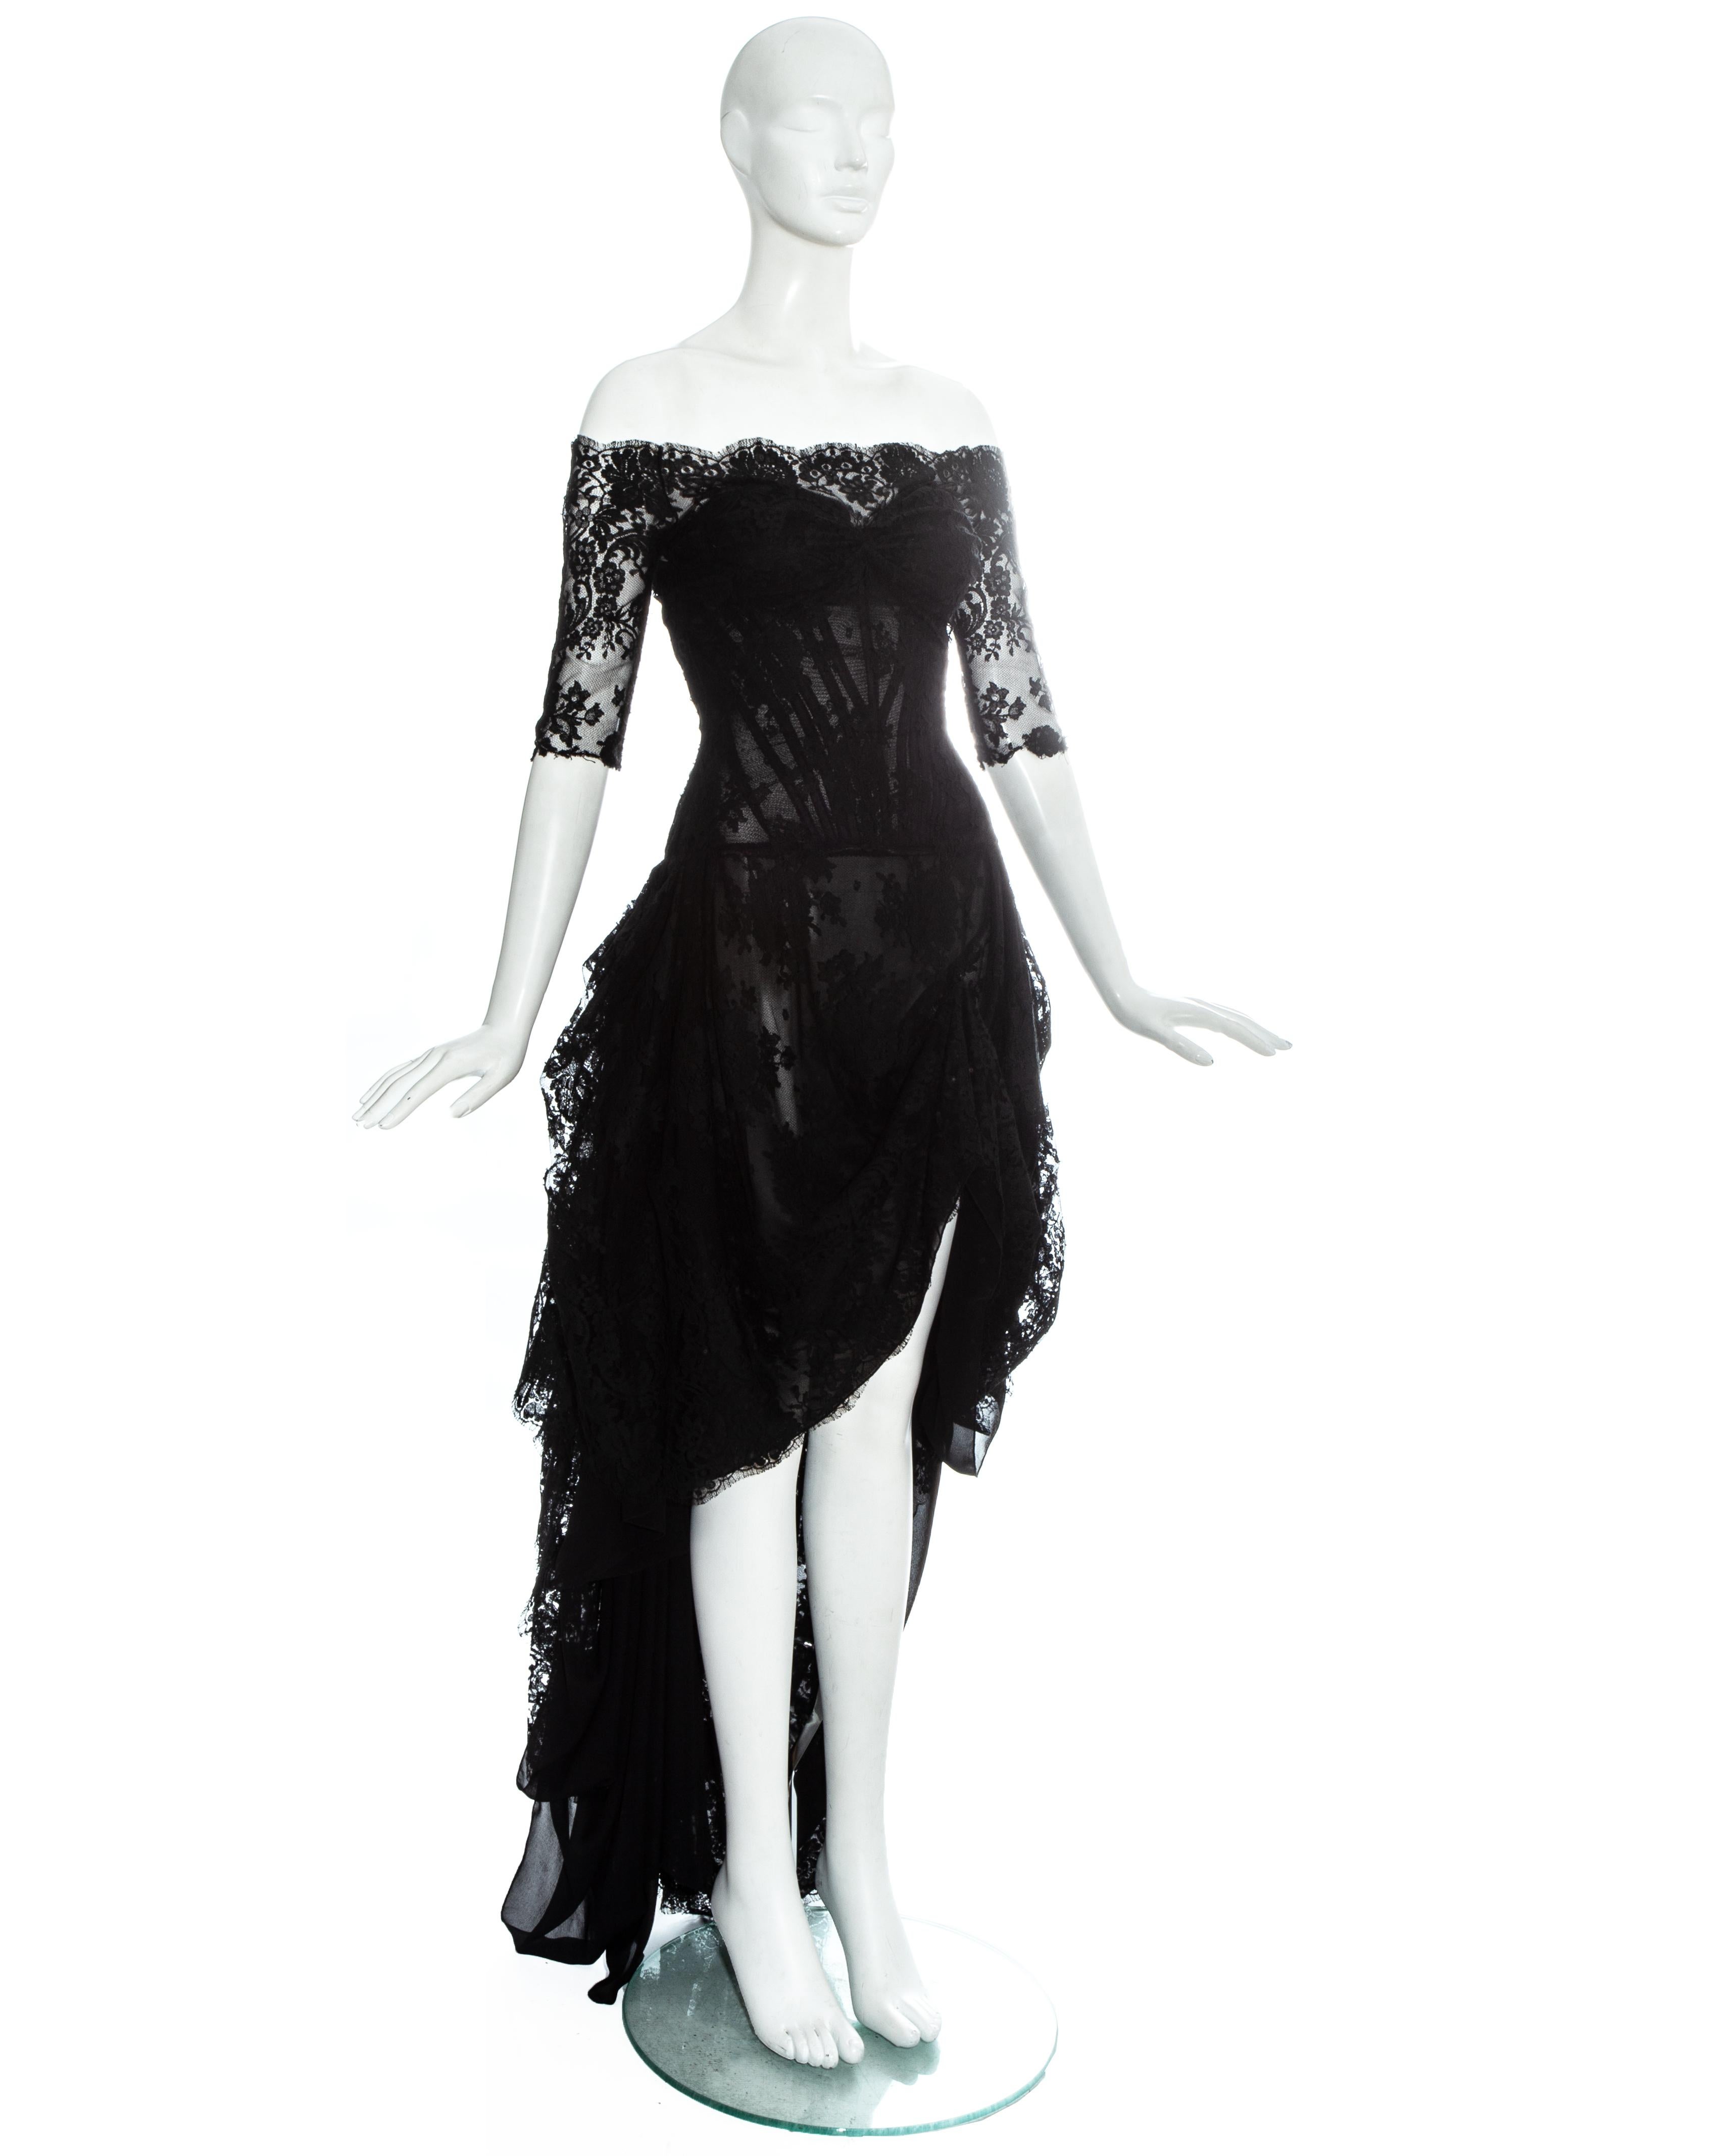 Women's Alexander McQueen black lace corseted trained evening dress, 'Sarabande' ss 2007